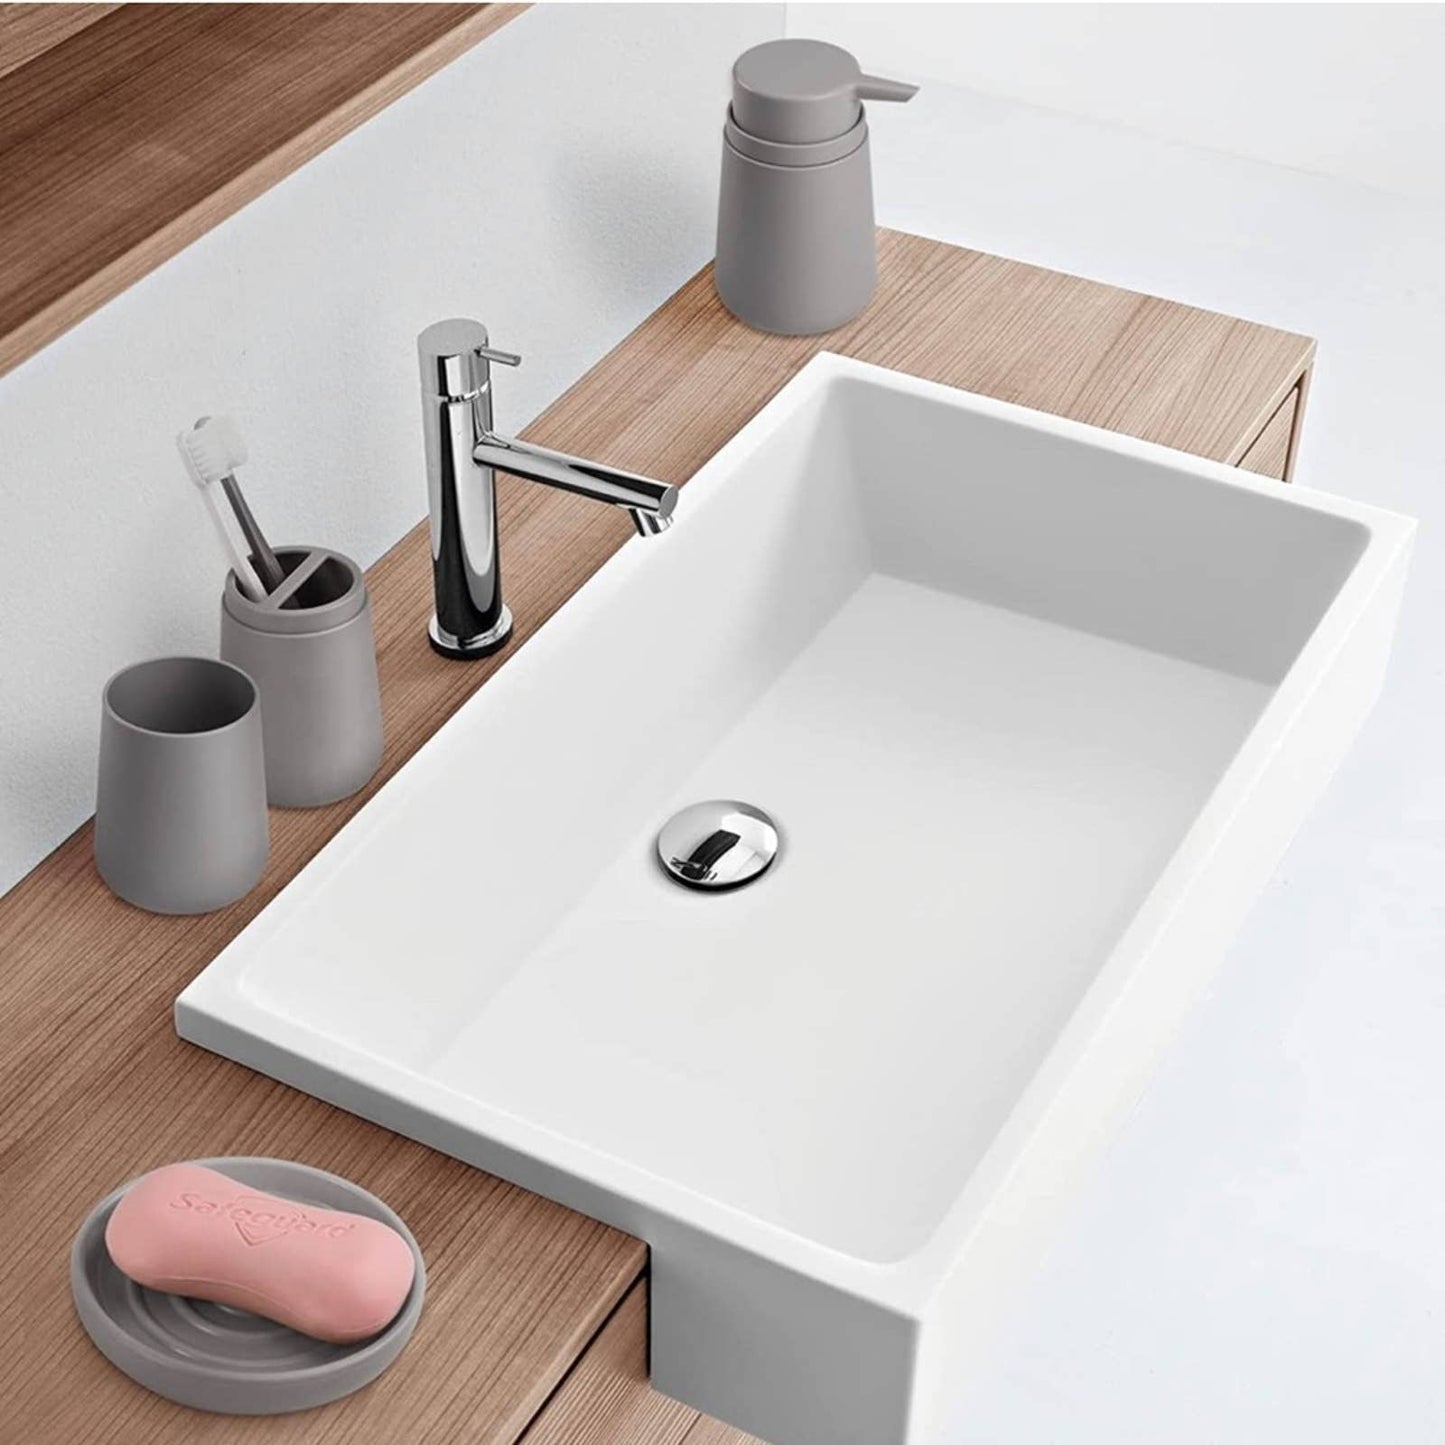 IMAVO Bathroom Accessories Set,Soap Lotion Dispenser,Soap Dish, etc 4 Pieces